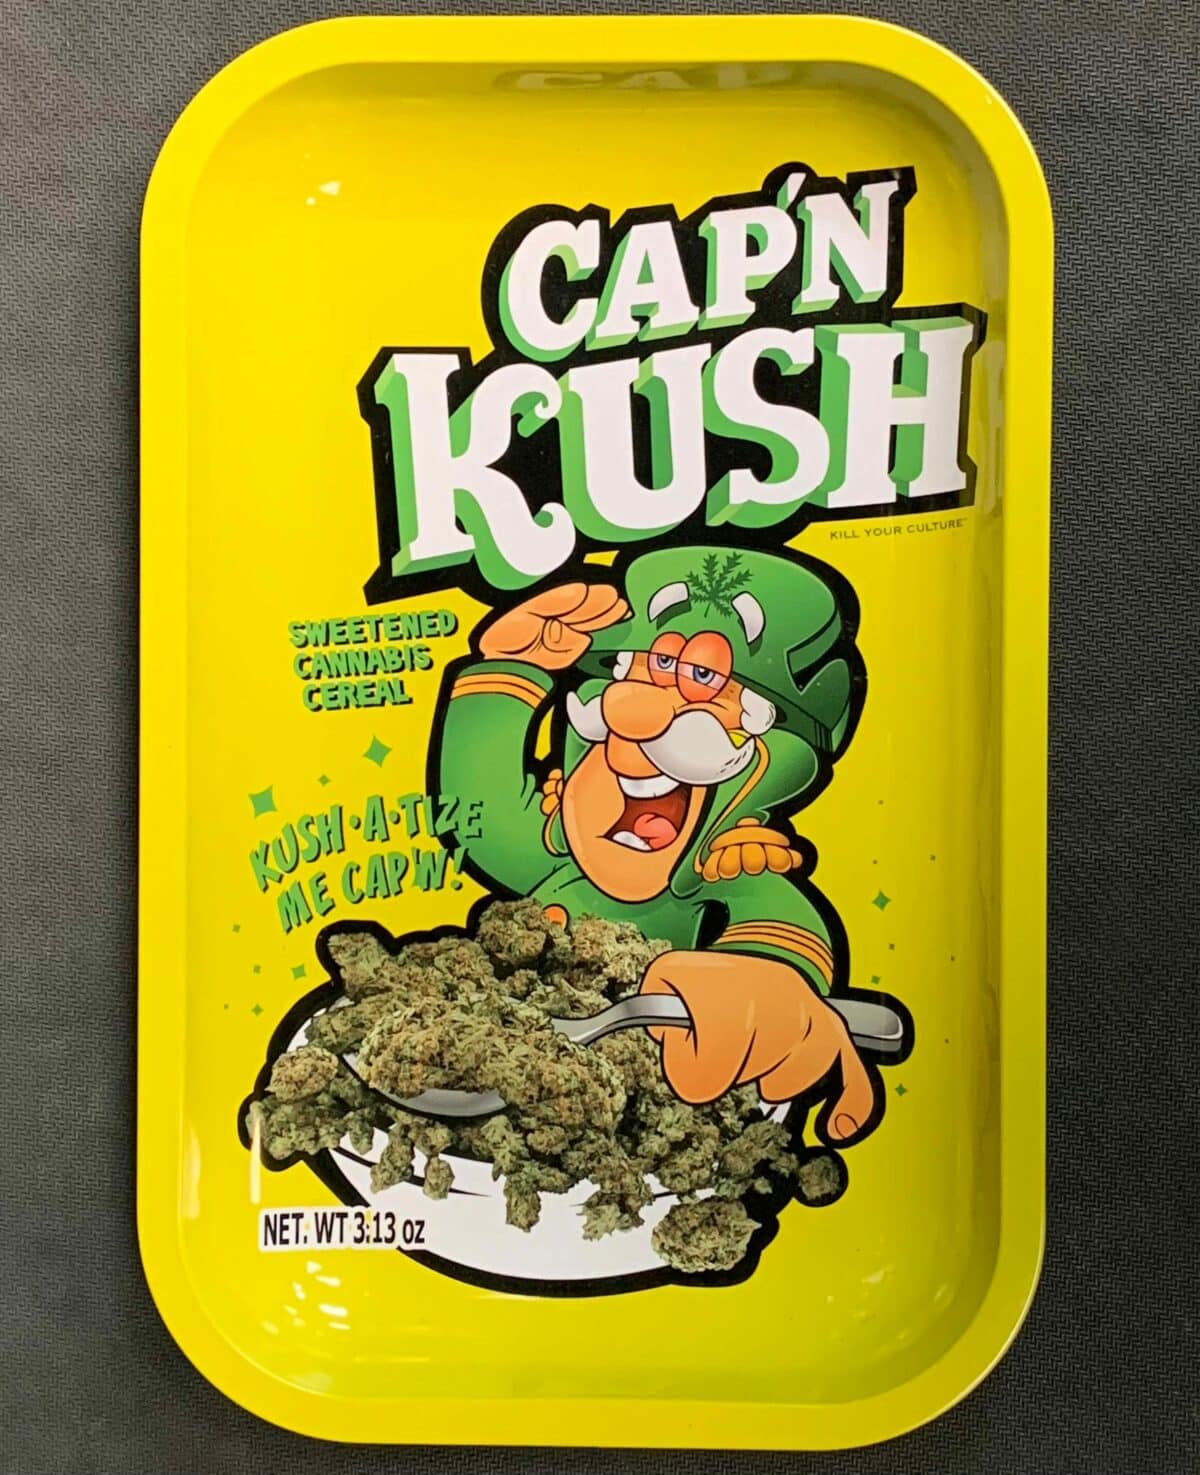 Captian crunch Kush Rolling Tray 10.75" x 6.75"